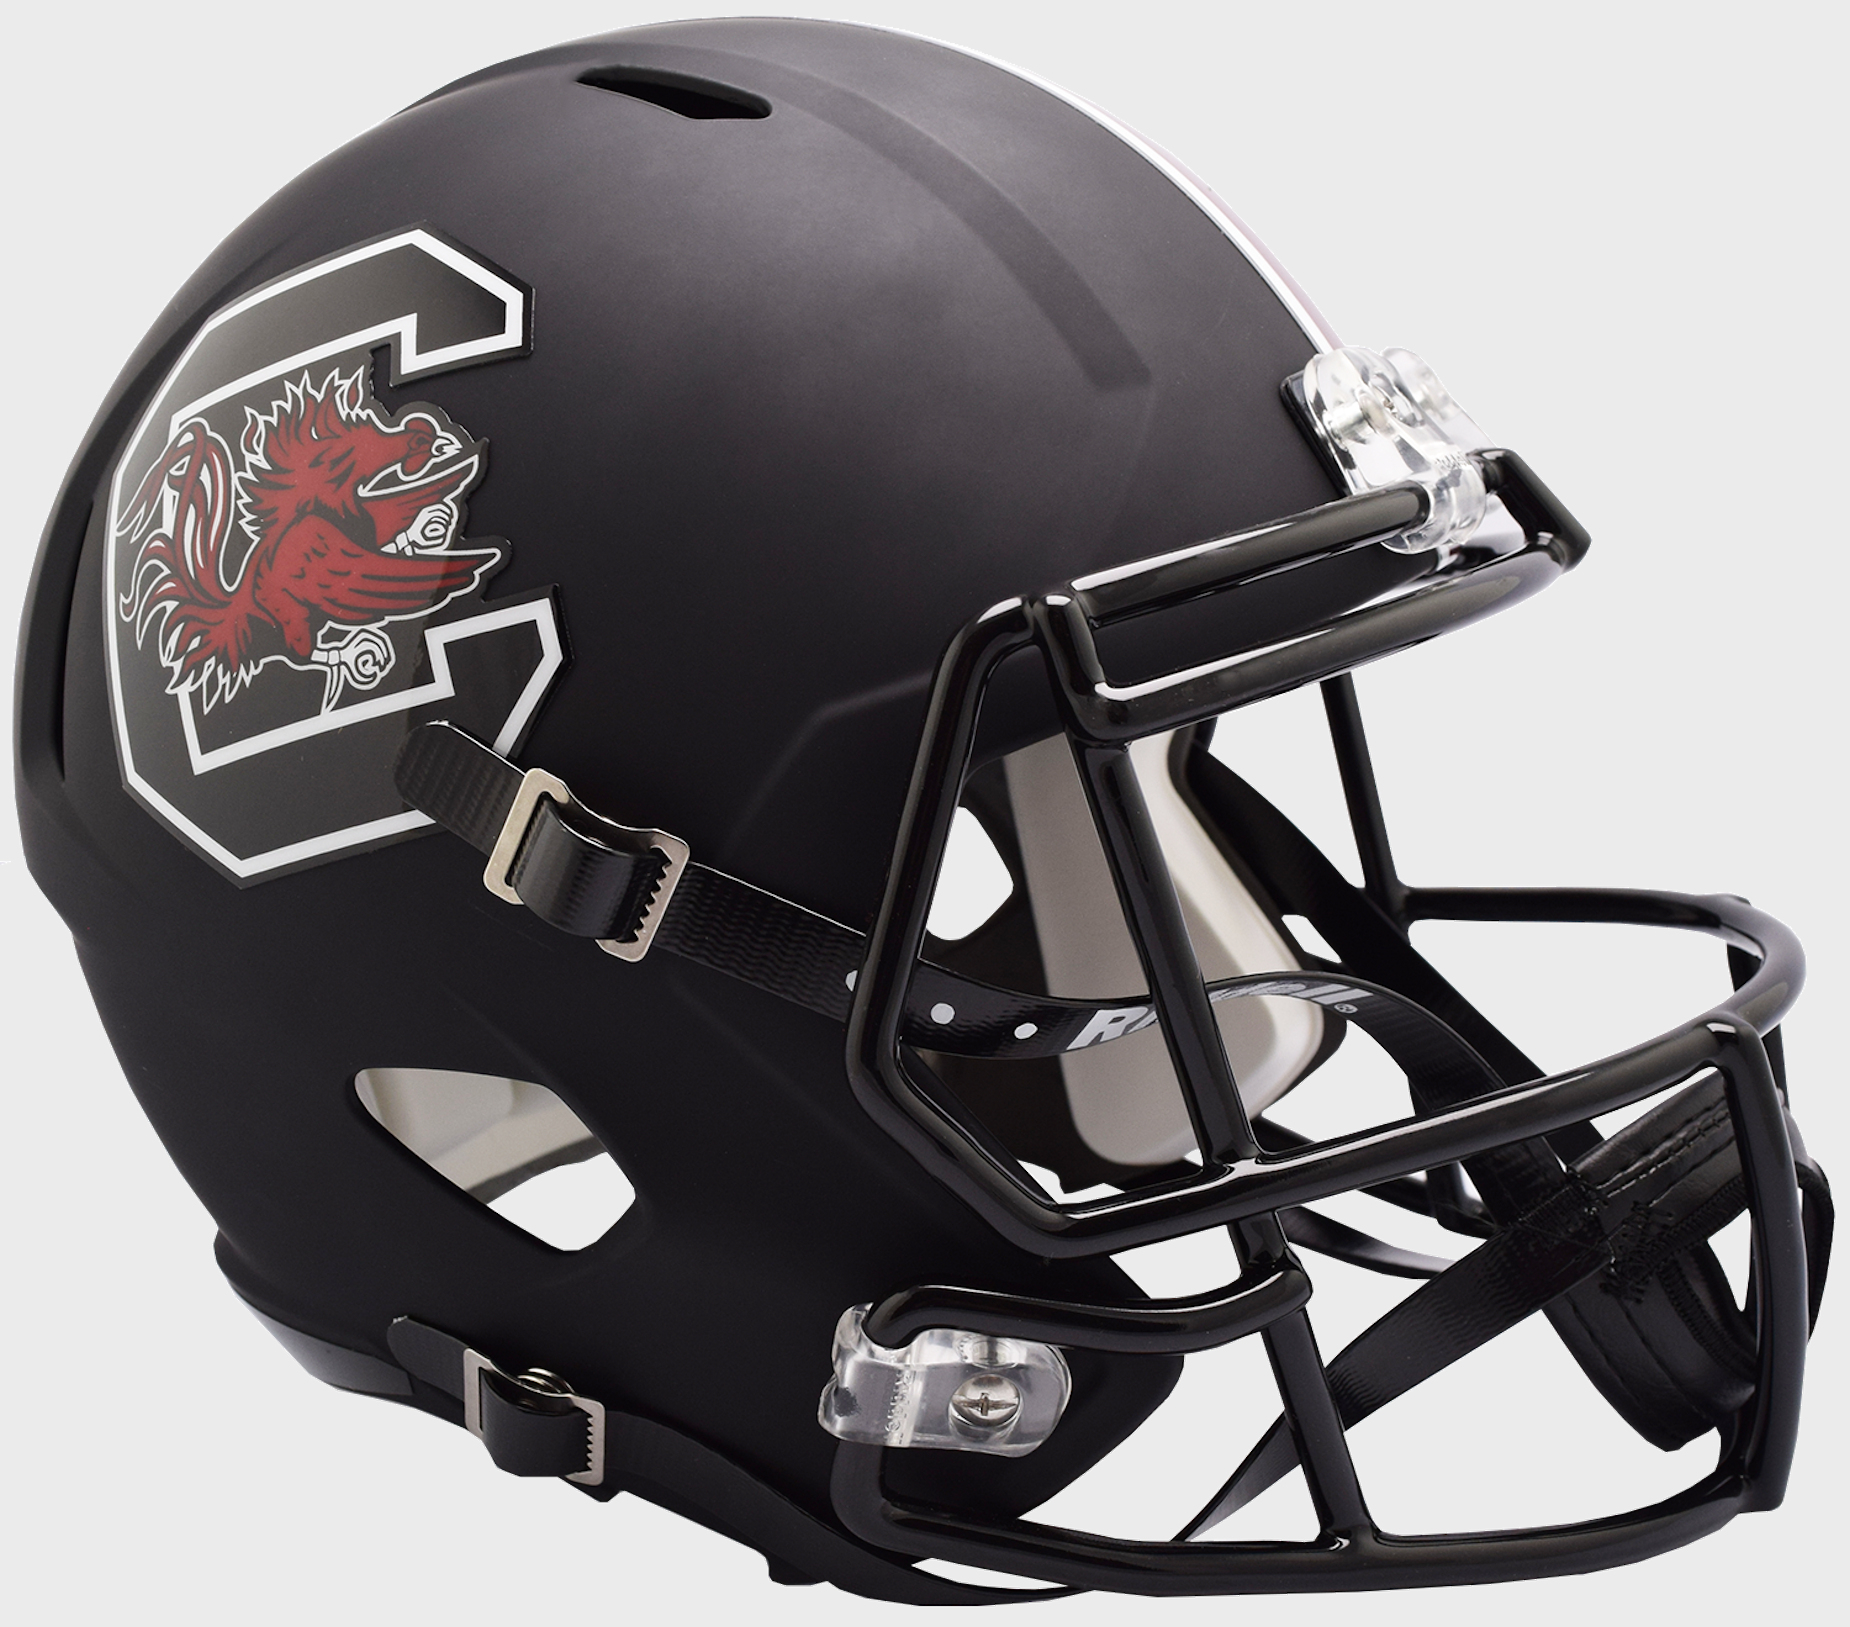 South Carolina Gamecocks full size replica helmet